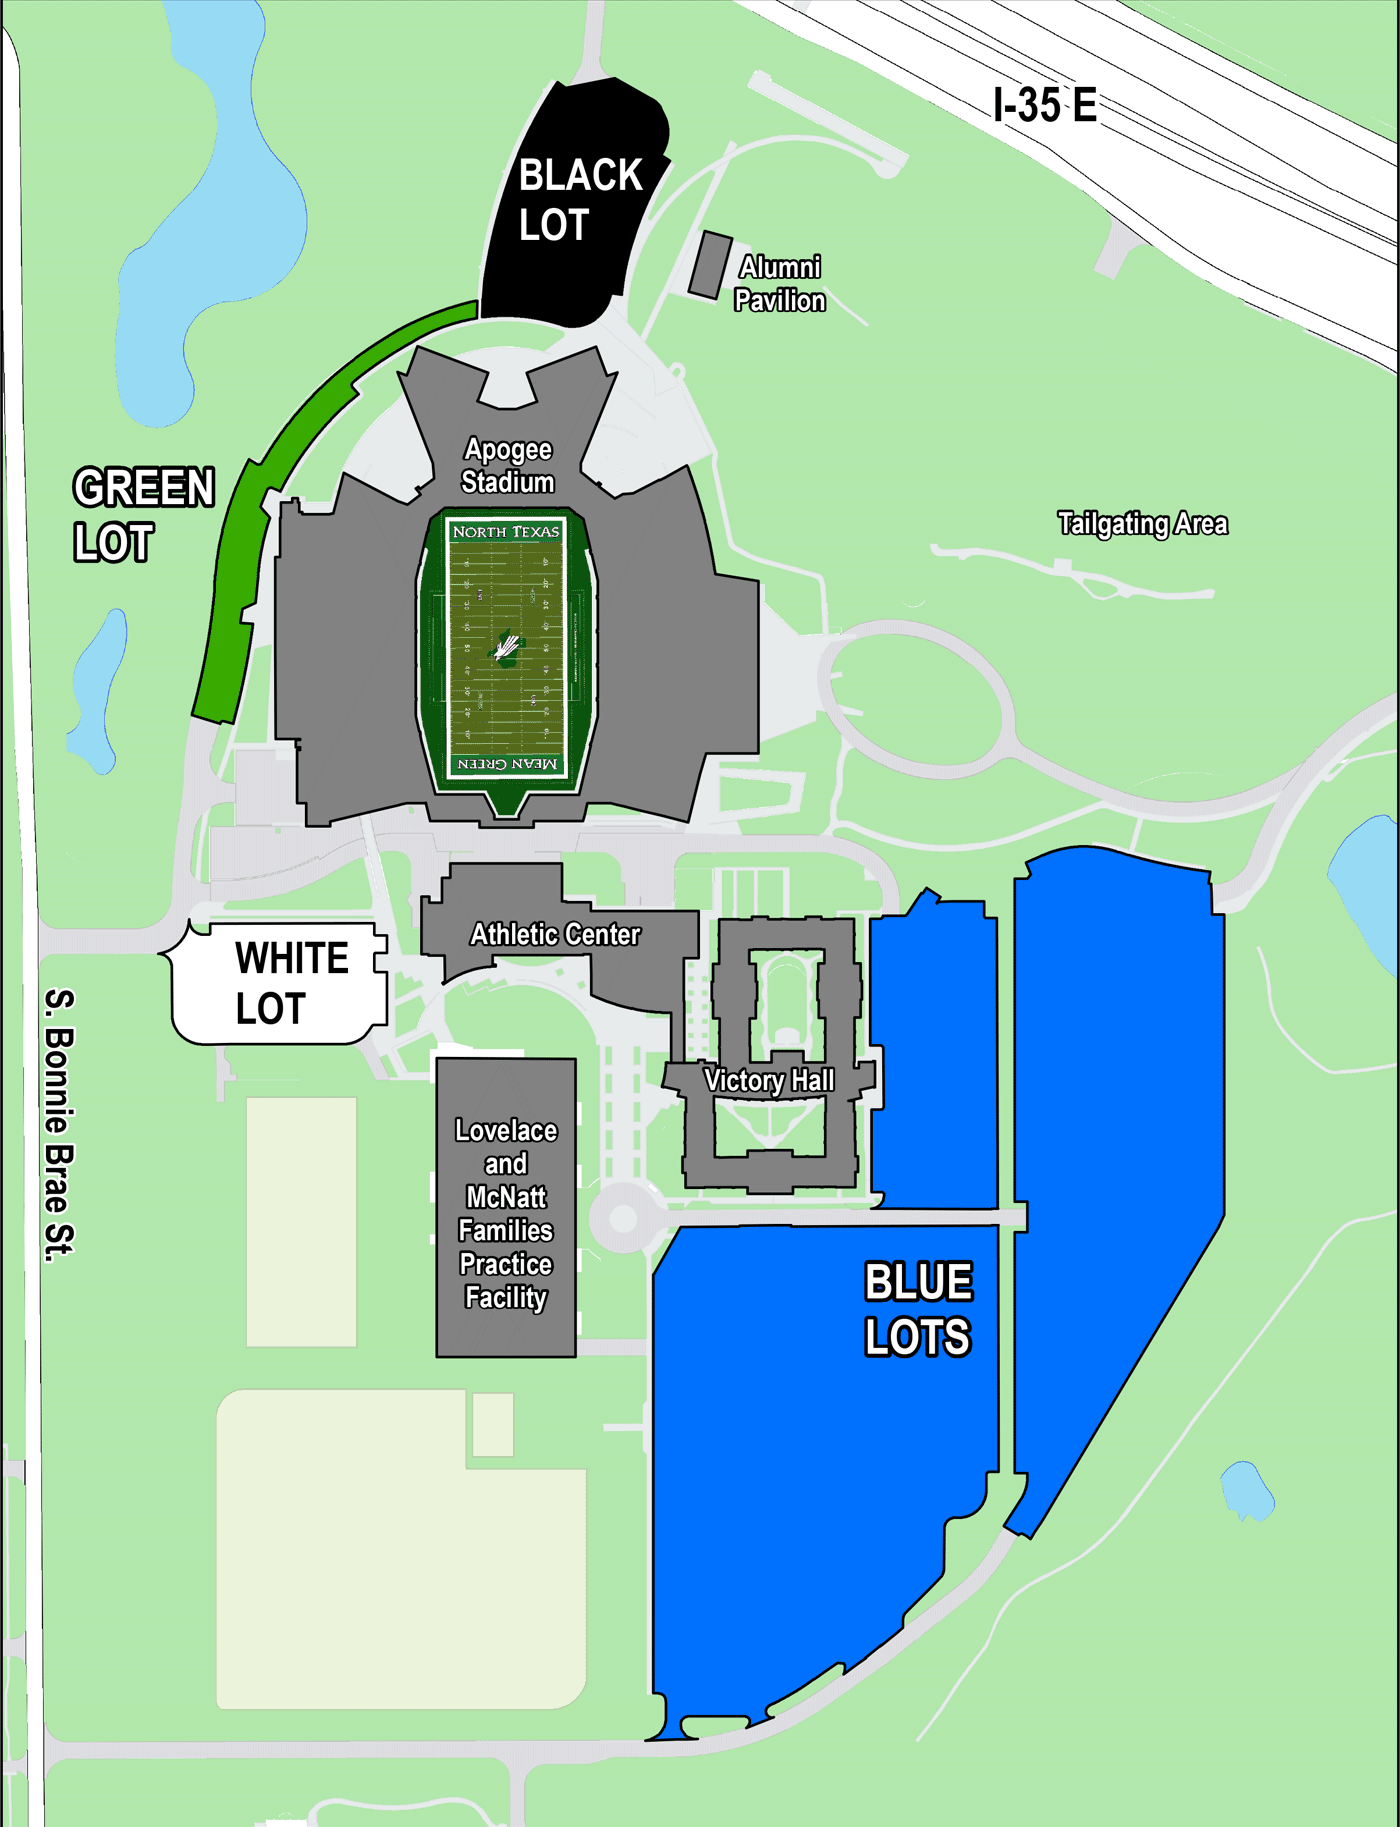 Apogee Stadium parking